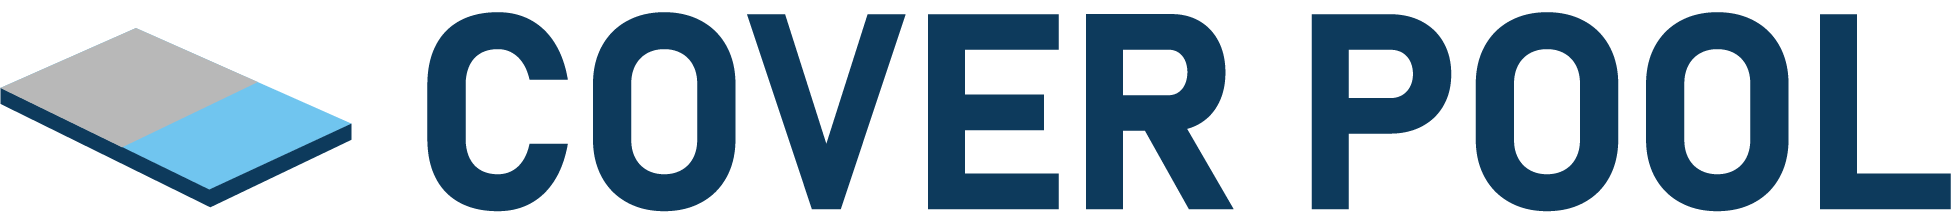 Logo-coverpool